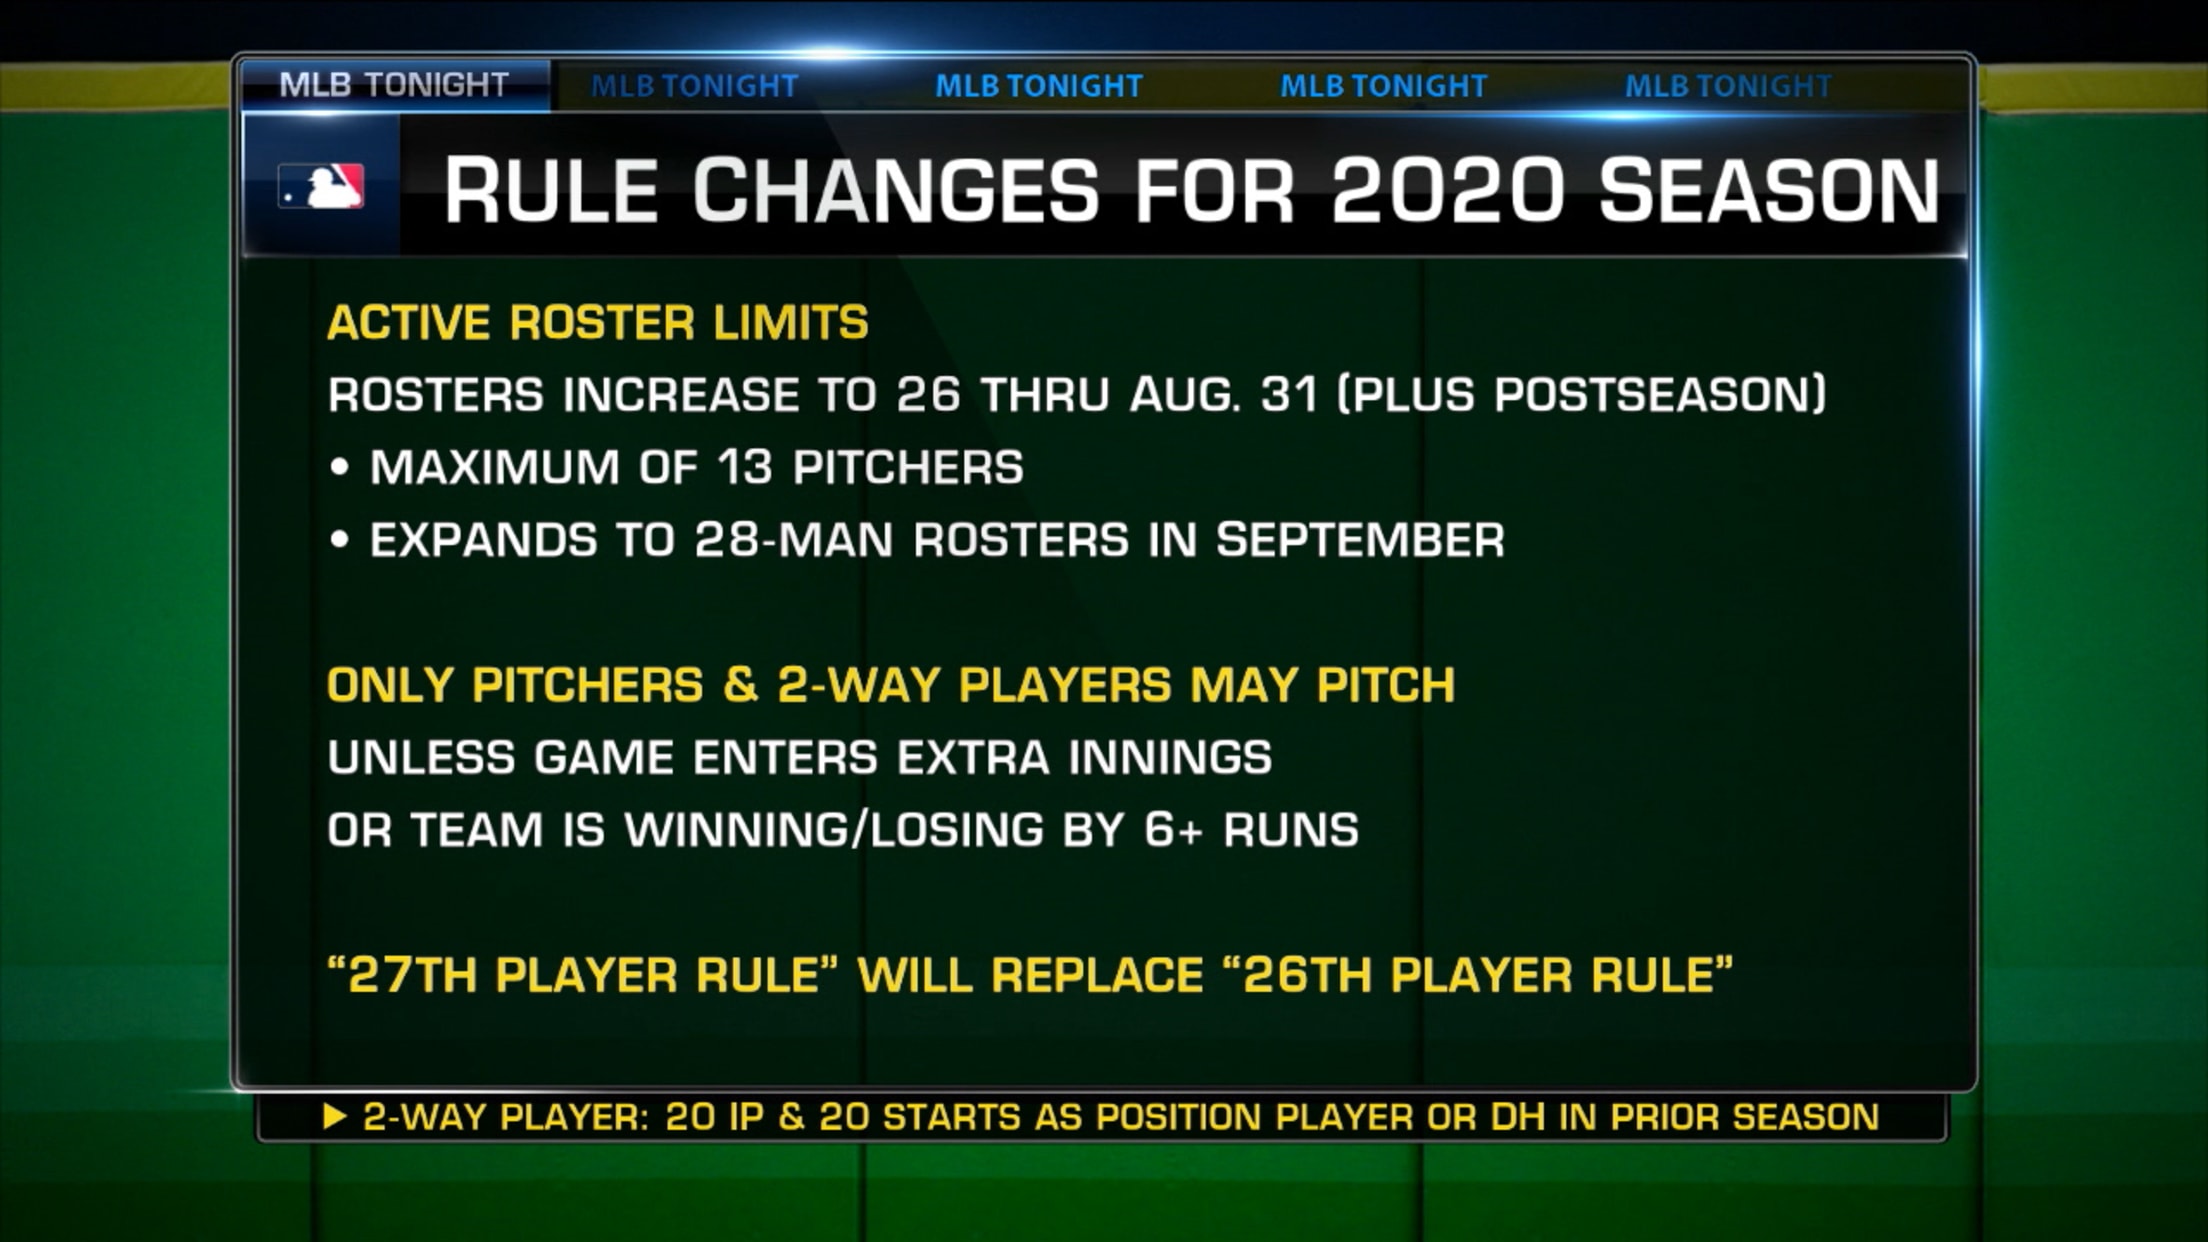 MLB Dnes večer na nové změny pravidel